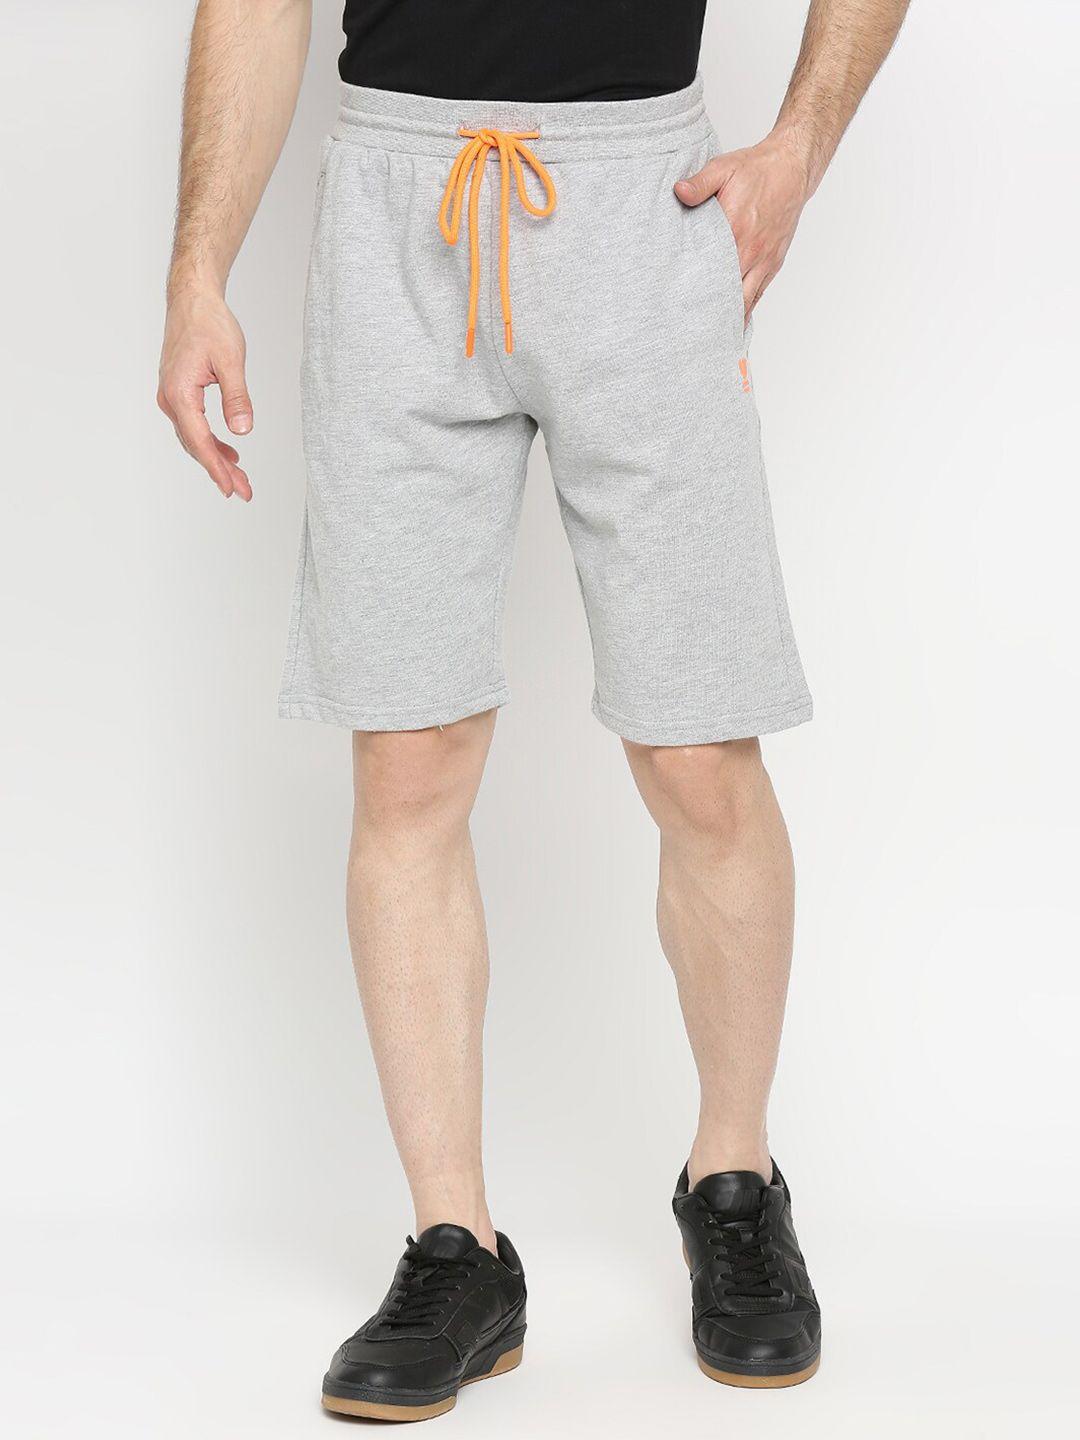 underjeans-by-spykar-men-grey-solid-shorts